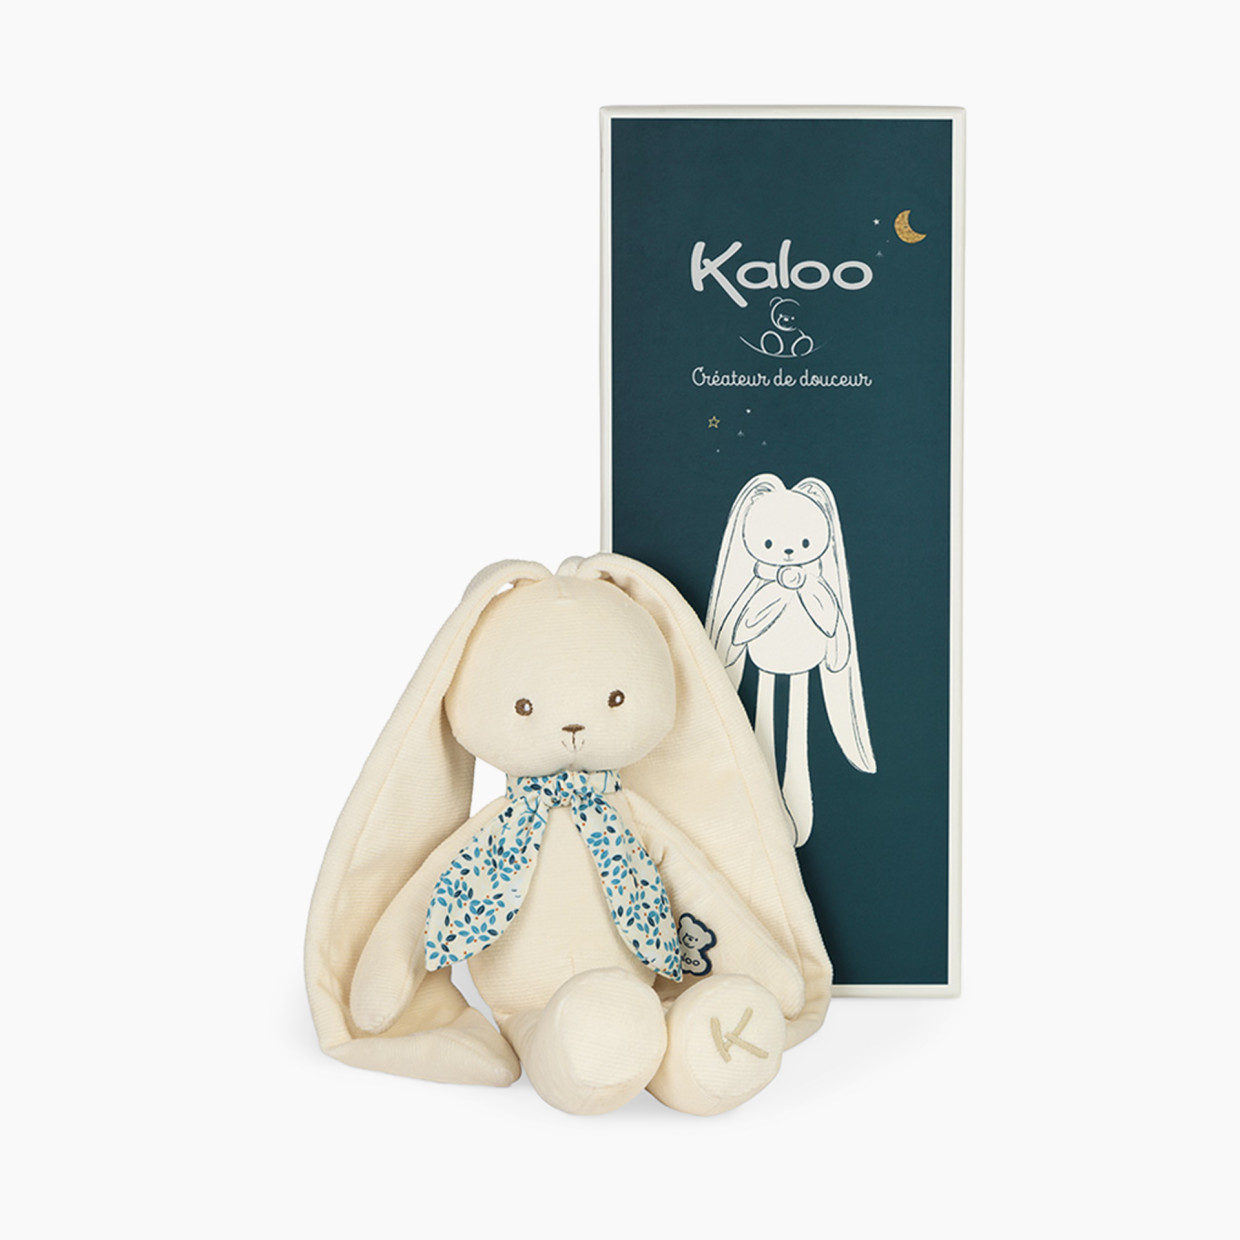 Kaloo Lapinoo Medium Rabbit Doll - Cream.